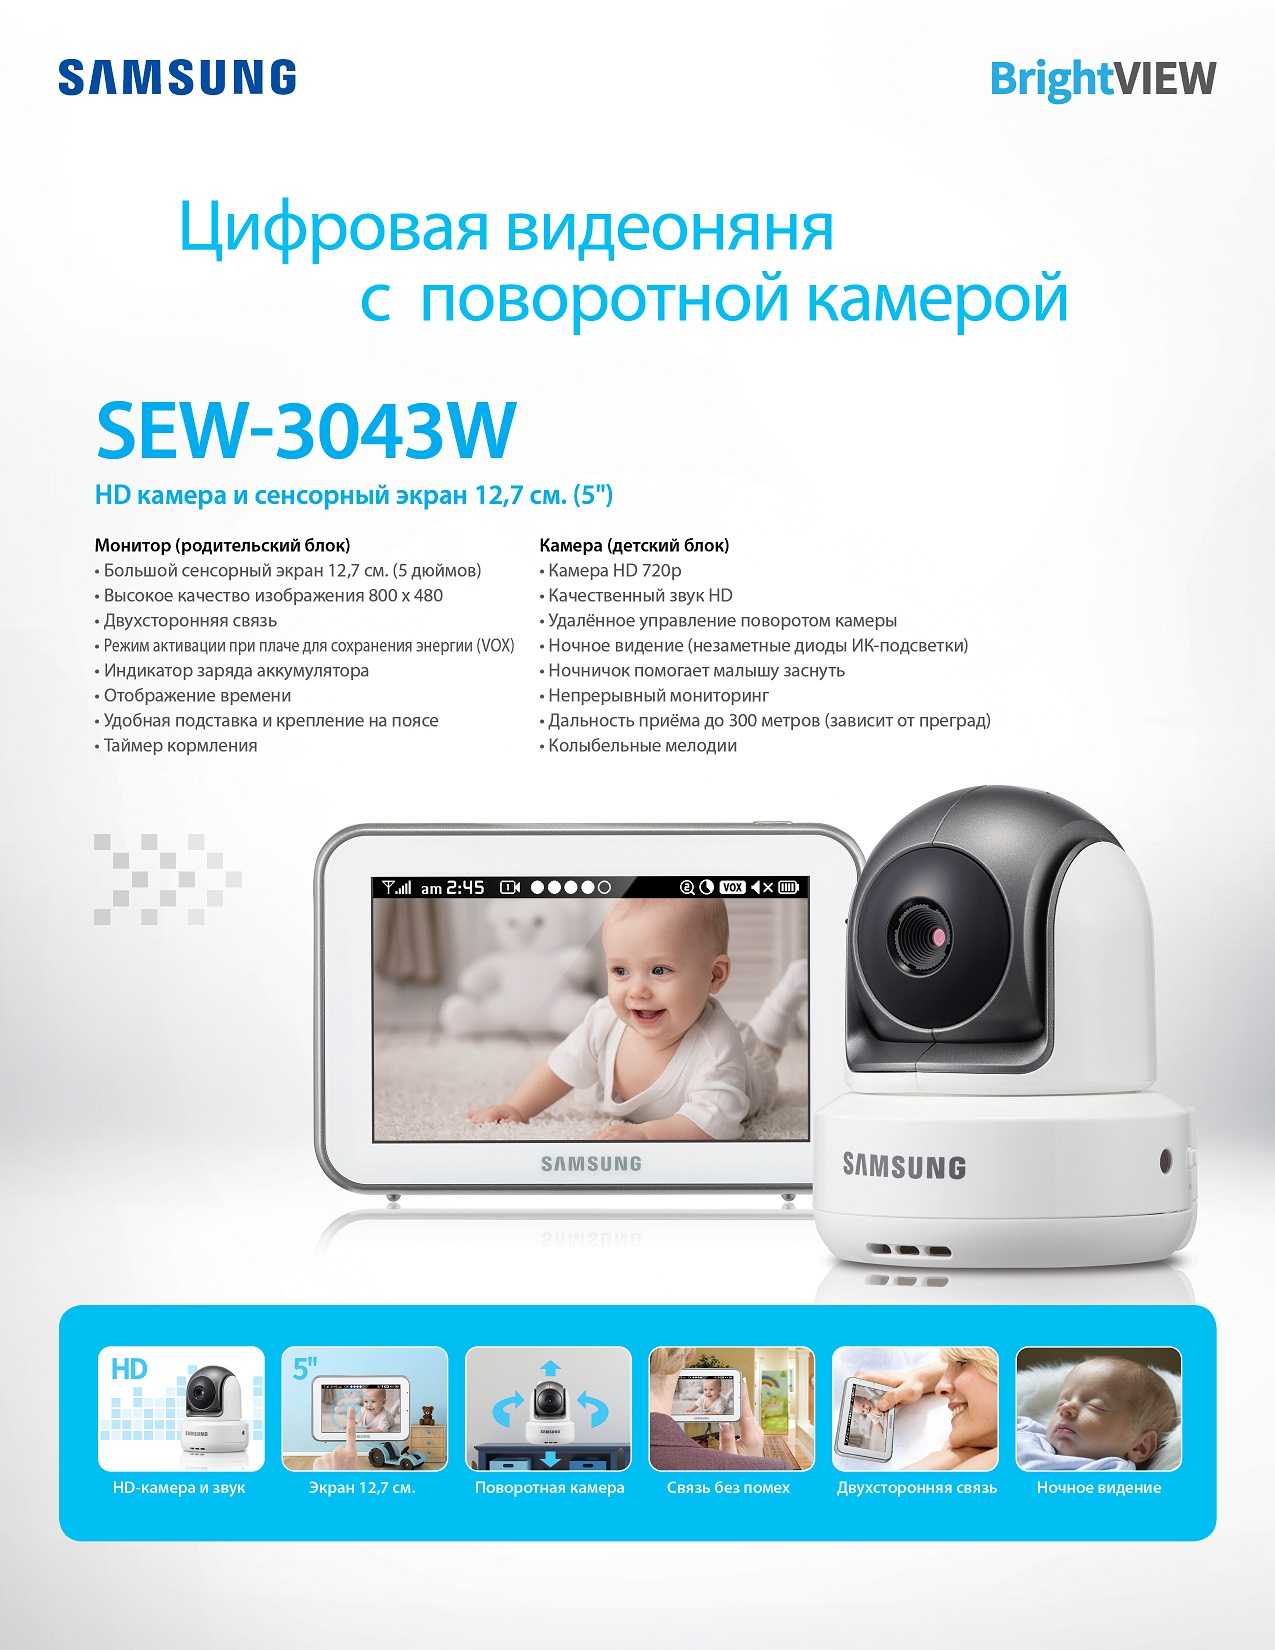 Видеоняня с двумя камерами Samsung SEW-3043WPX2 